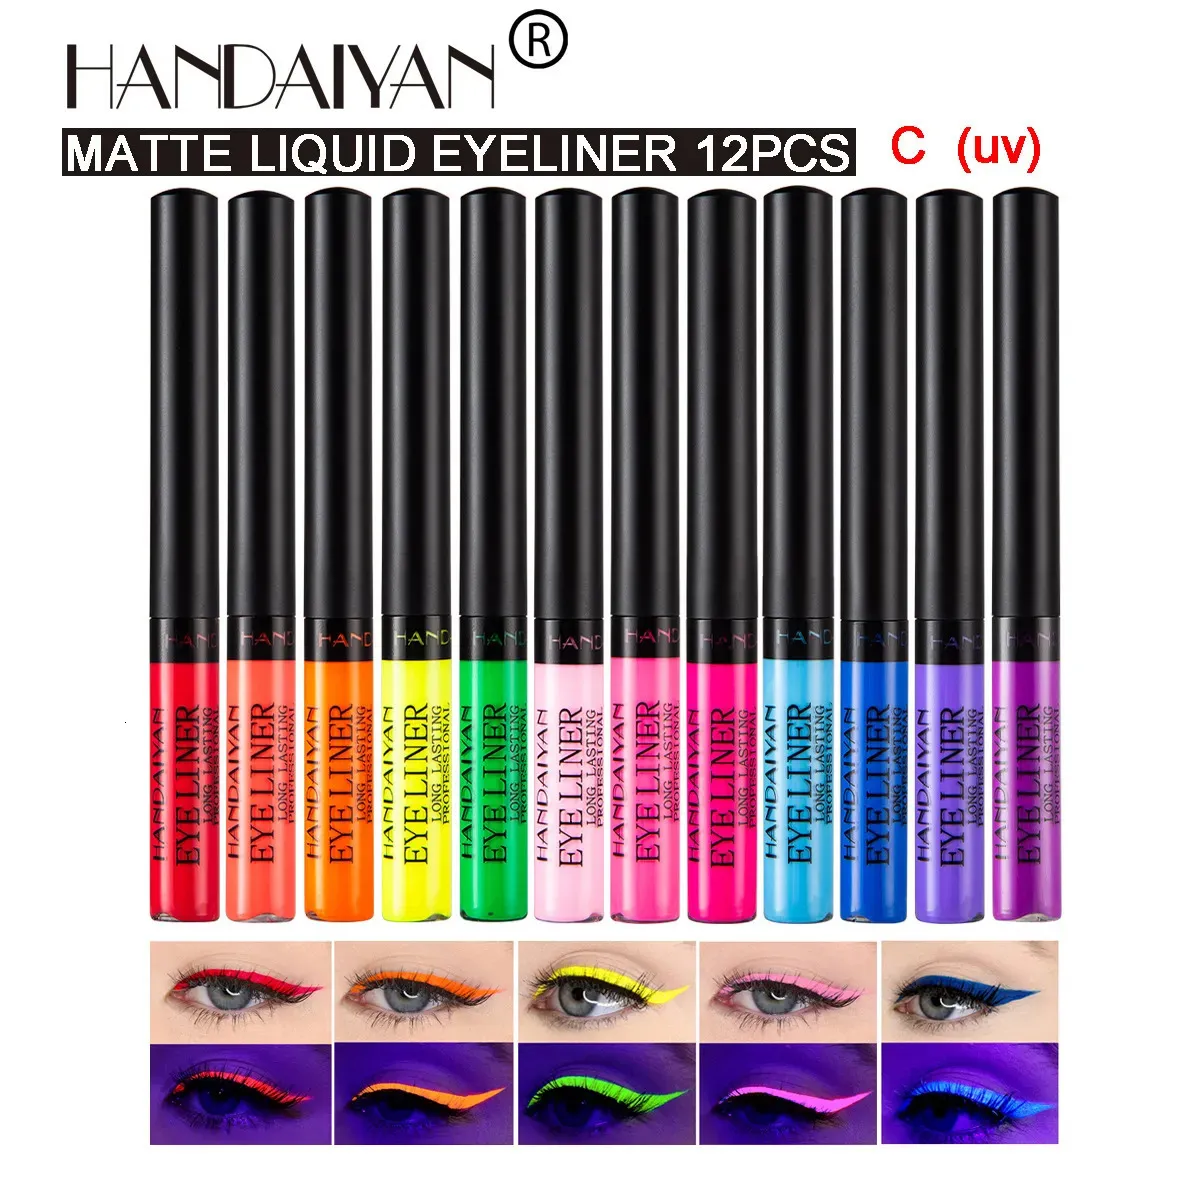 Eye Shadow/Liner Combination Handaiyan 12 Colors Matte UV Luminous Liquid Colorful Eyeliner Kit Waterproof Easy To Wear Make Up Eye Liner Pencil 231020